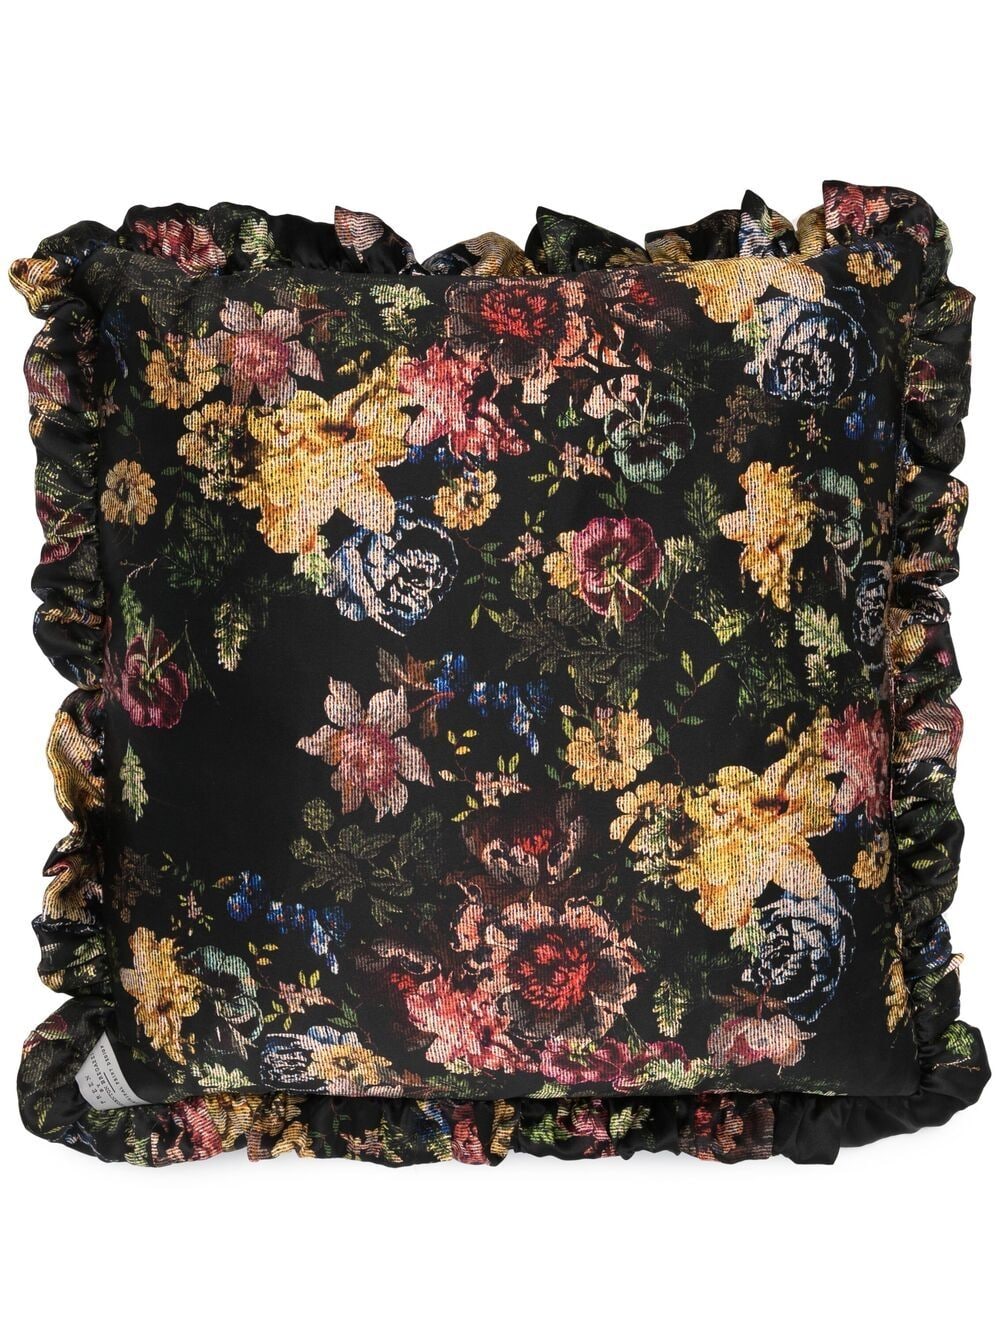 фото Preen by thornton bregazzi подушка с цветочным принтом и оборками